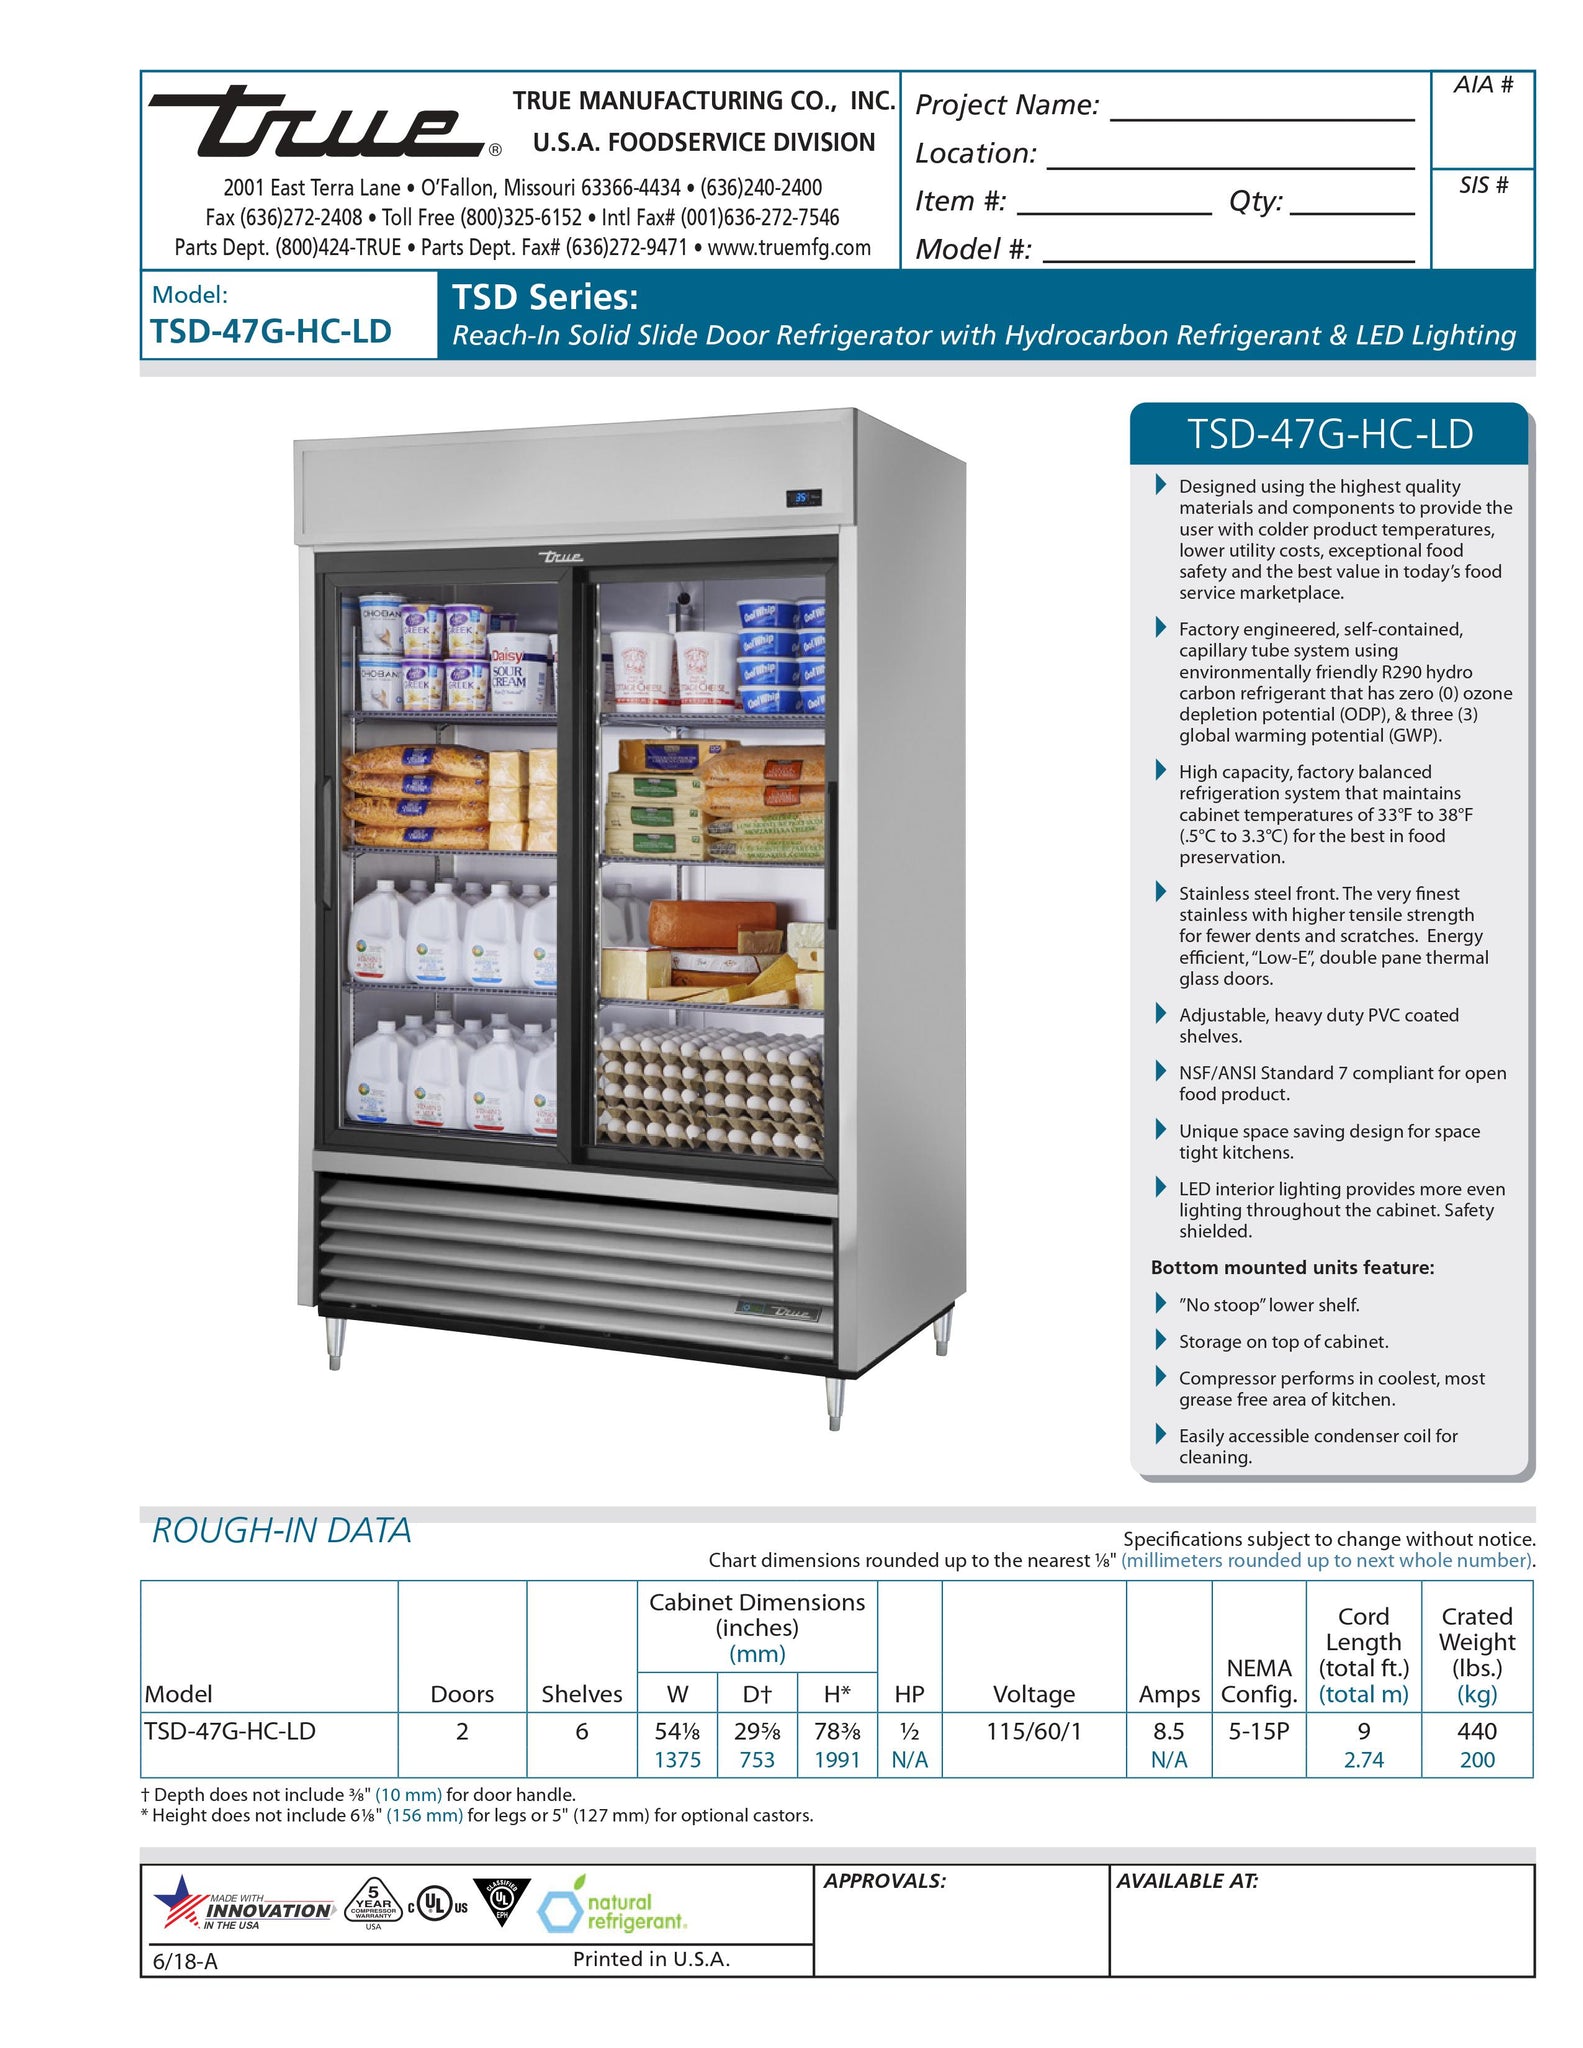 True TSD-47G-HC-LD 54" Two Section Glass Door Reach-In Refrigerator